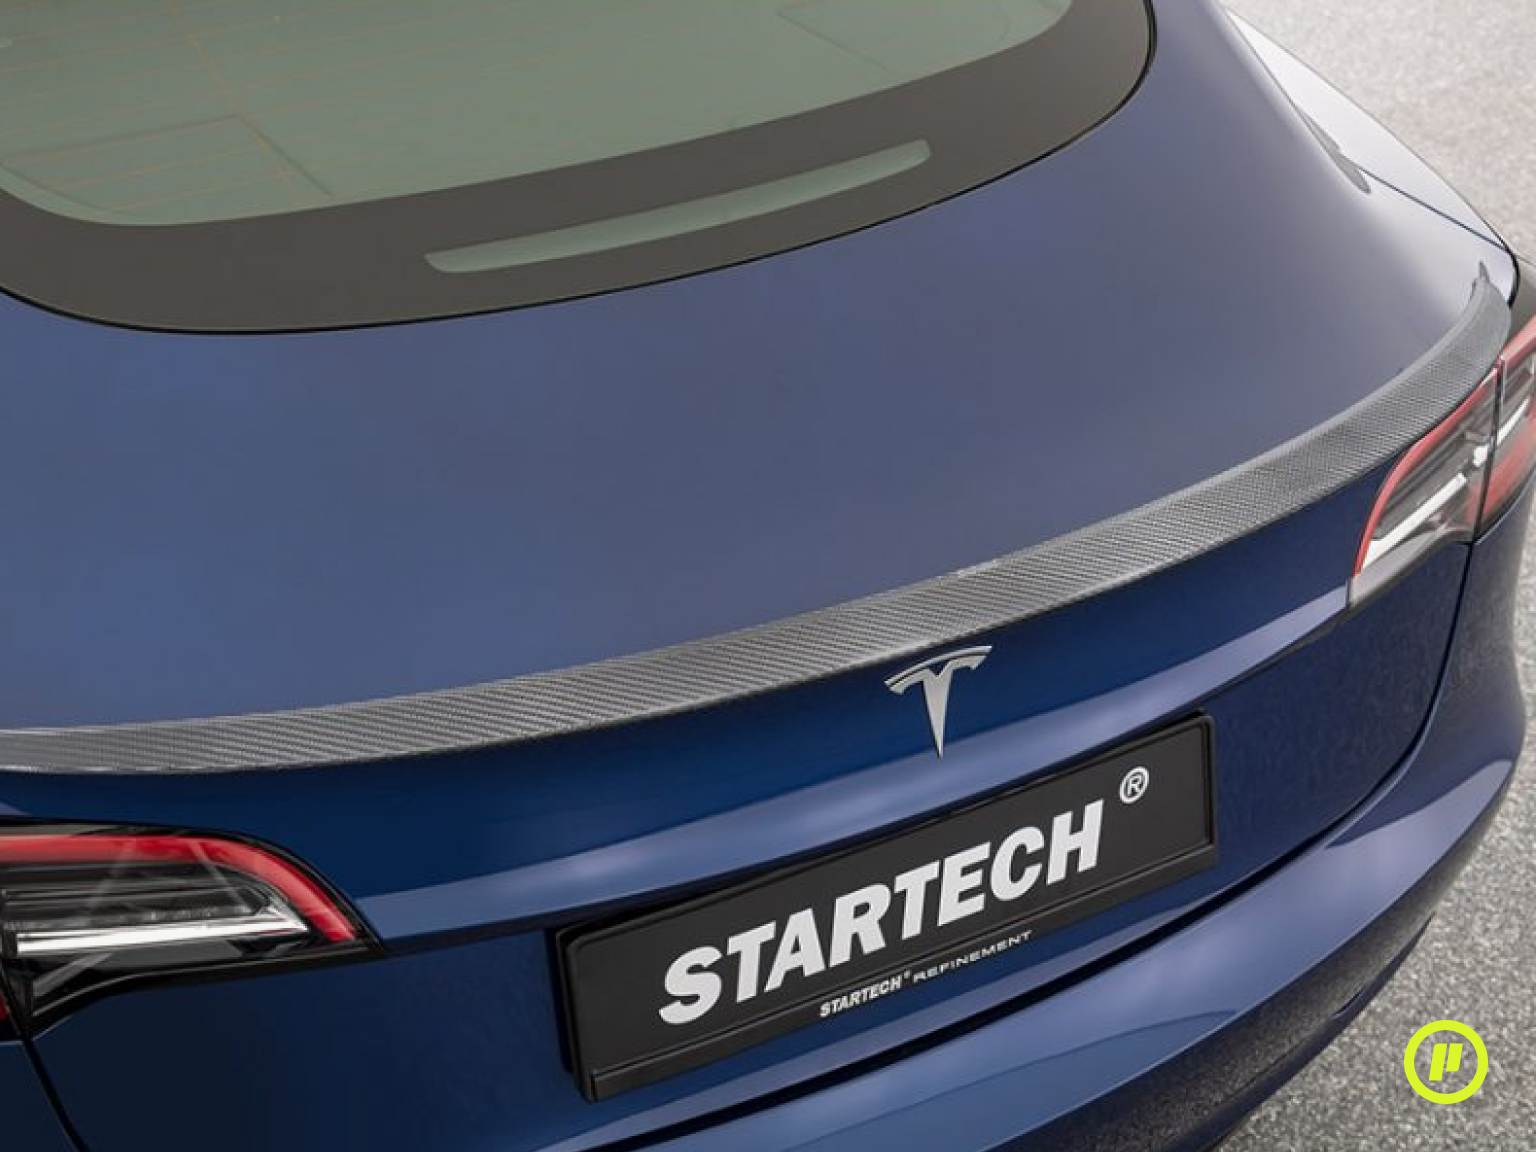 Startech Carbon Rear Spoiler for Tesla Model 3 (2017+)